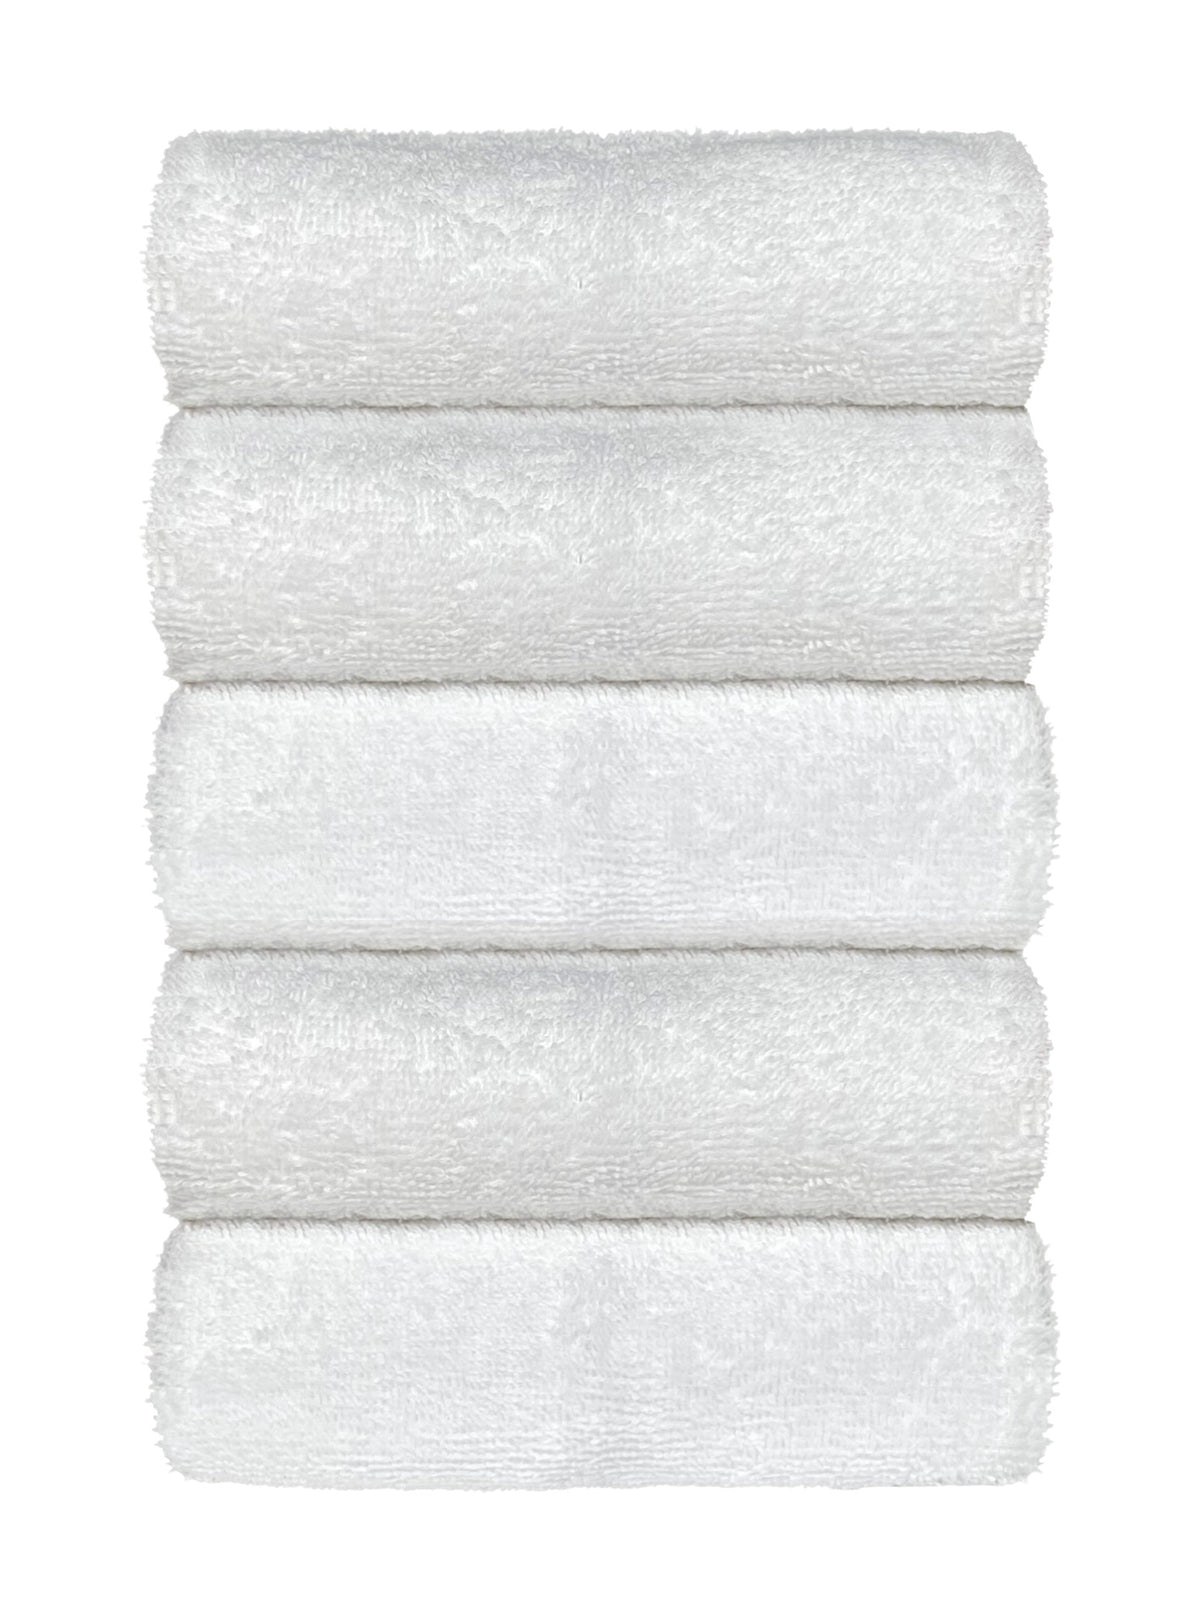 Set Asciugamani Bagno 100% Cotone Super Assorbenti Telo Doccia Spugna Professionali Salvietta Lavetta Viso Asciugamano Teli Asciugamano- Bianco